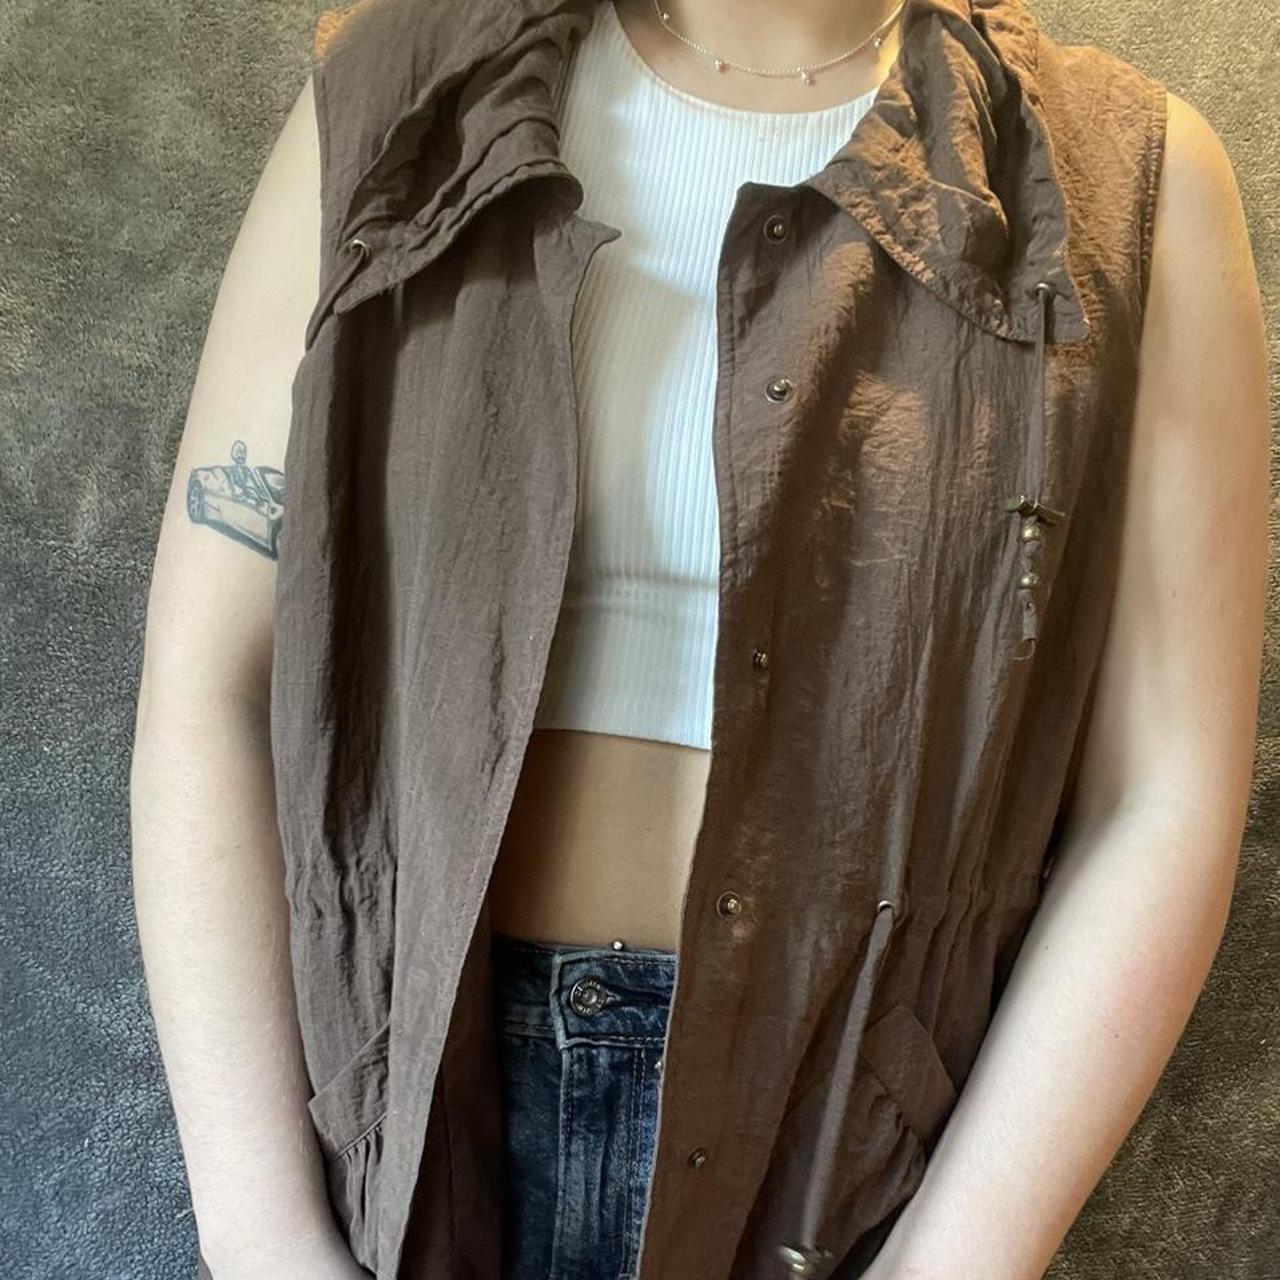 Product Image 2 - Women’s Vintage Oversized Brown Vest

Worn